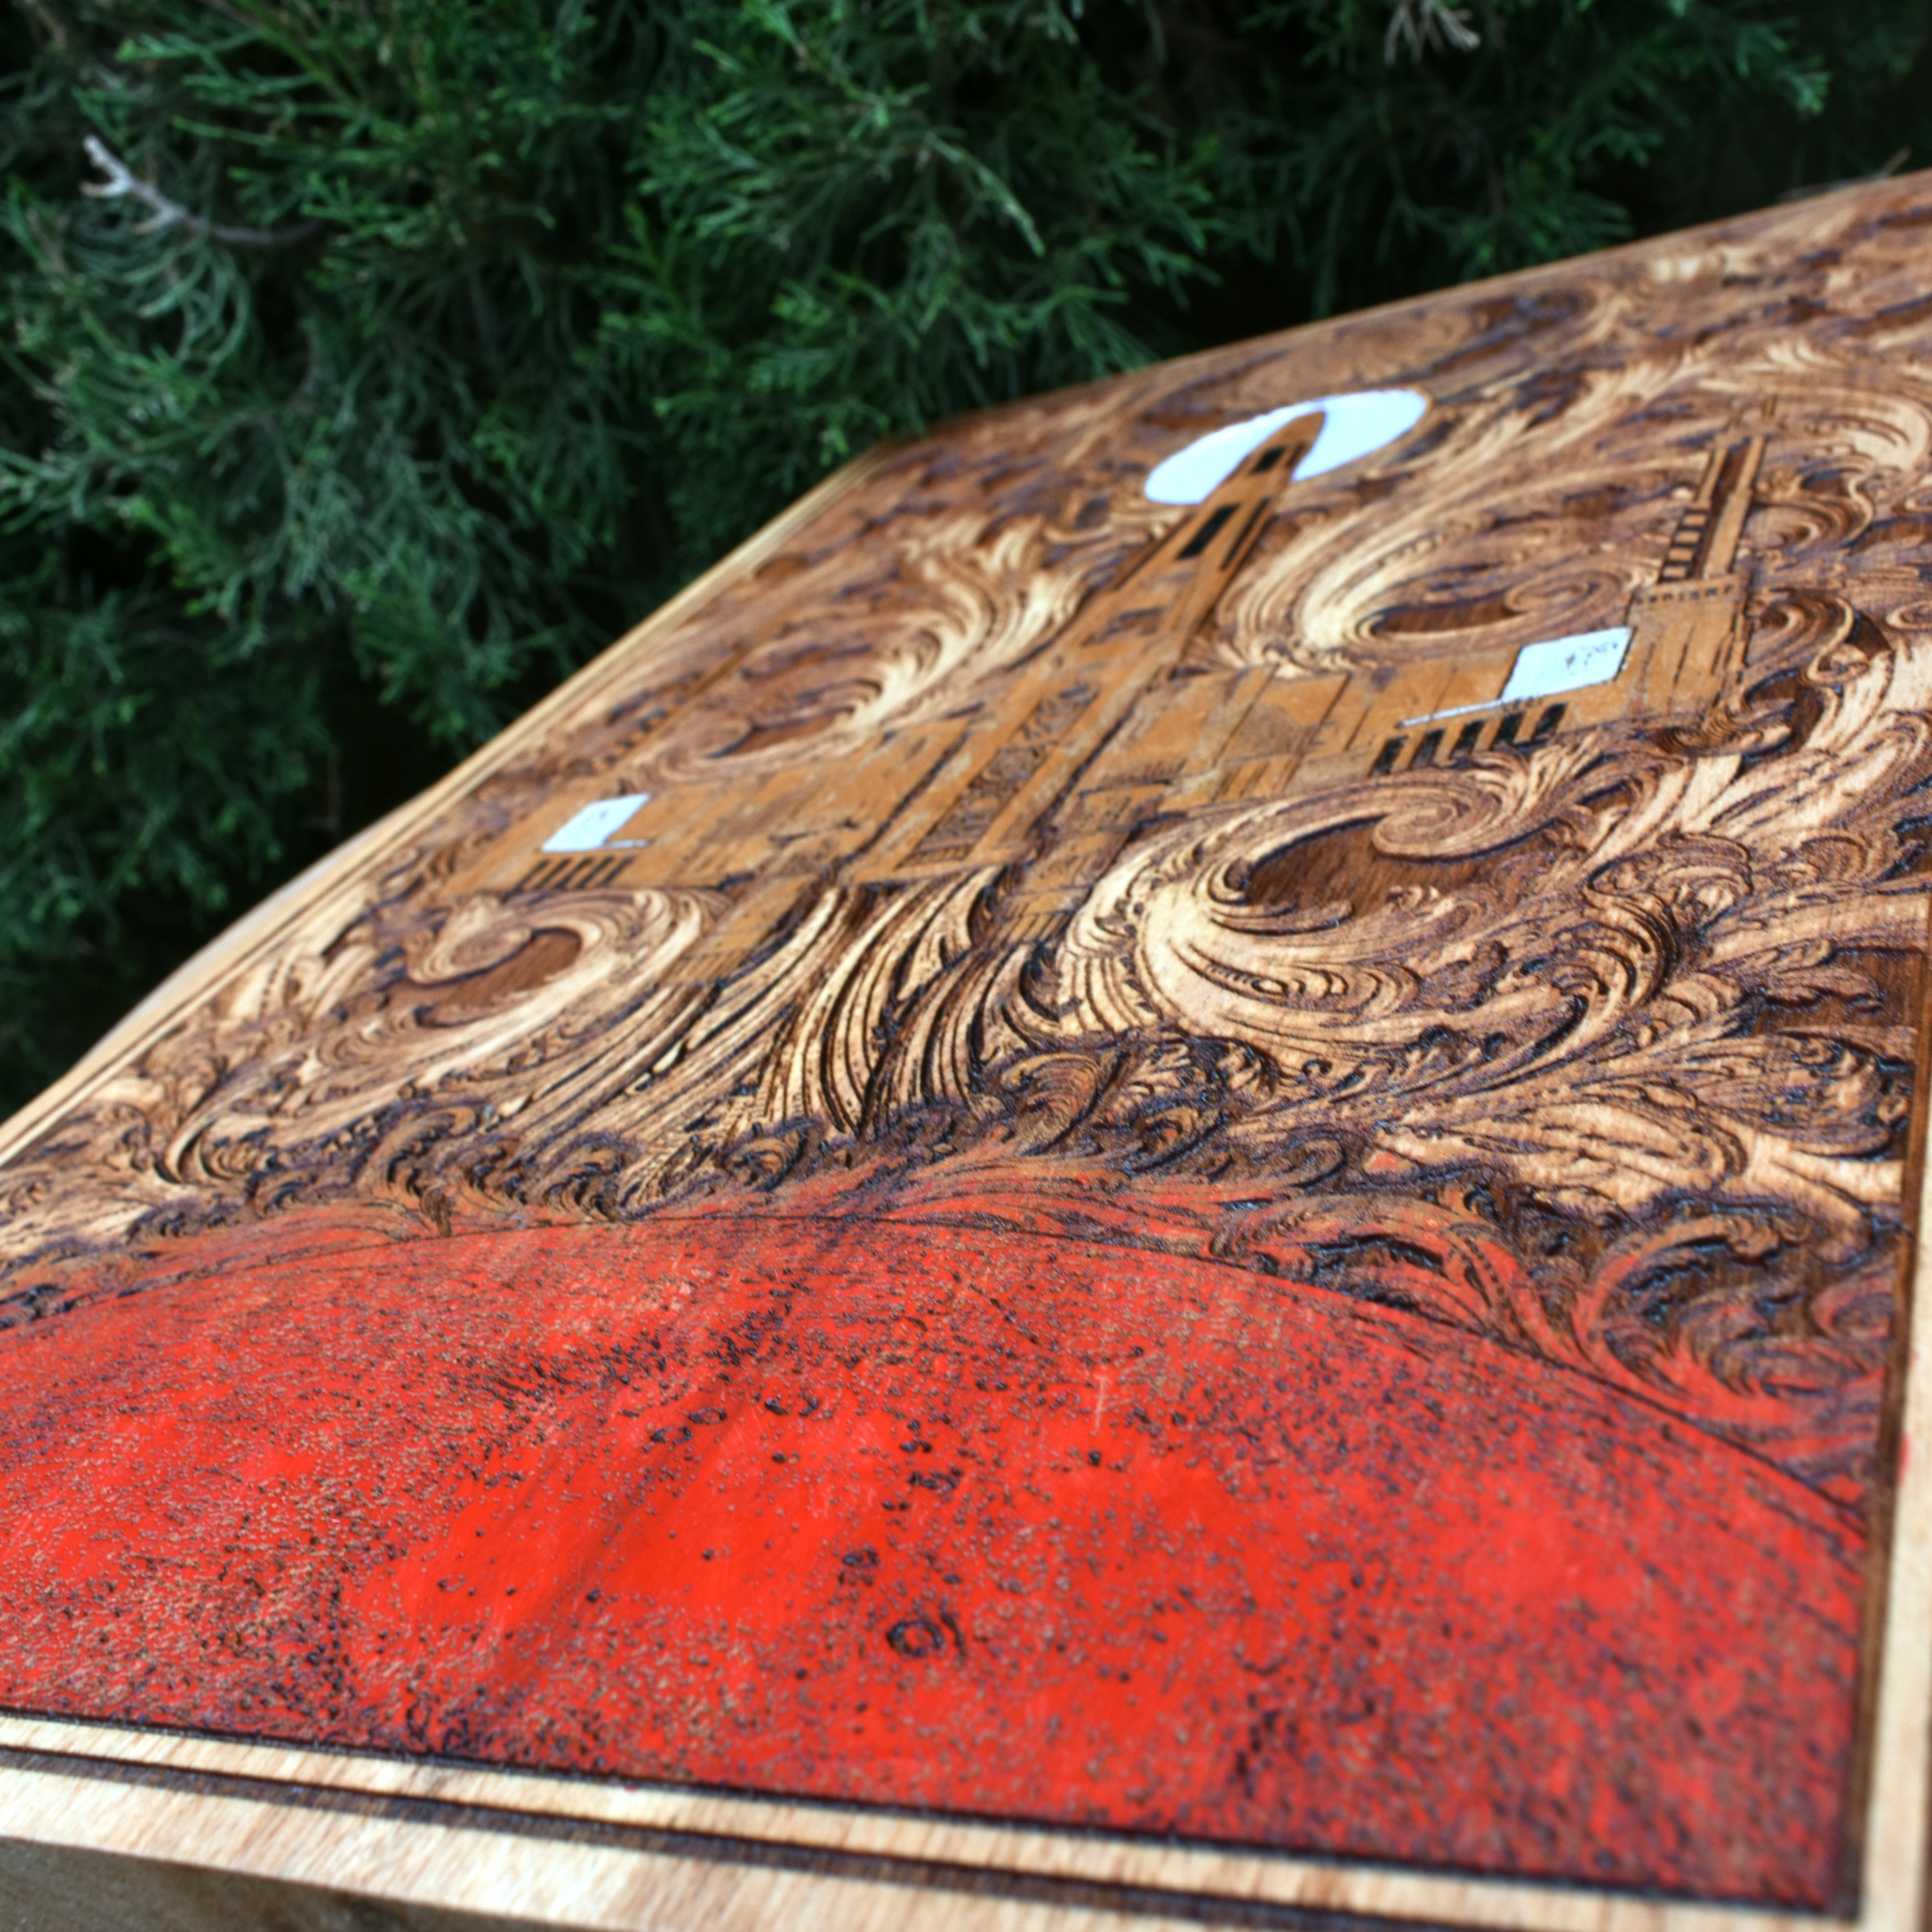 Star Wars Xwing Golden Edition - Cedar wood